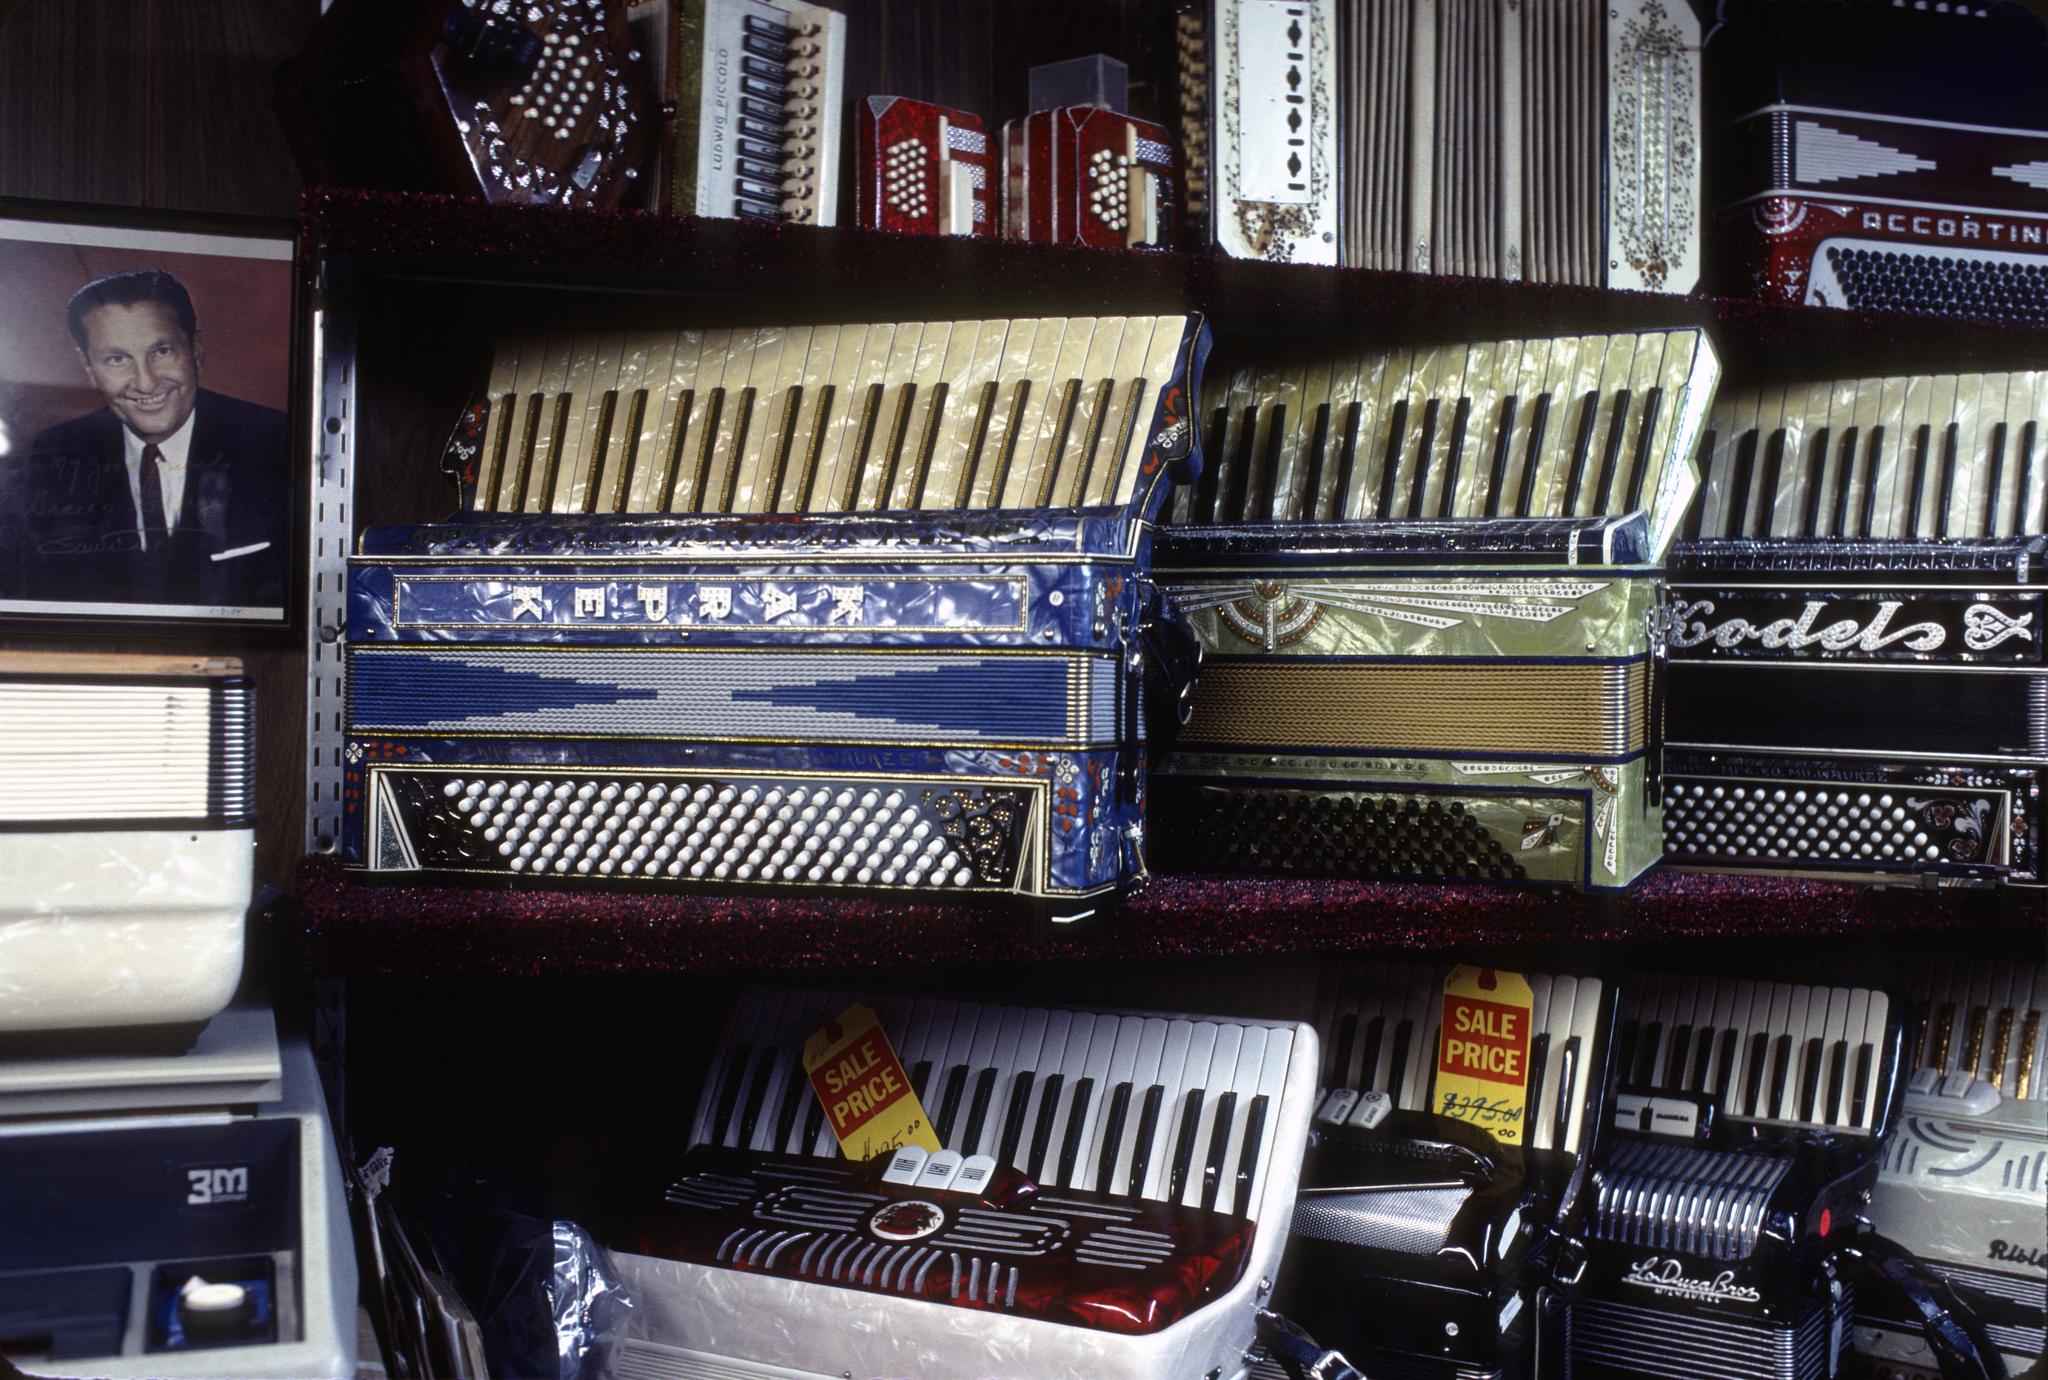 Piano accordions